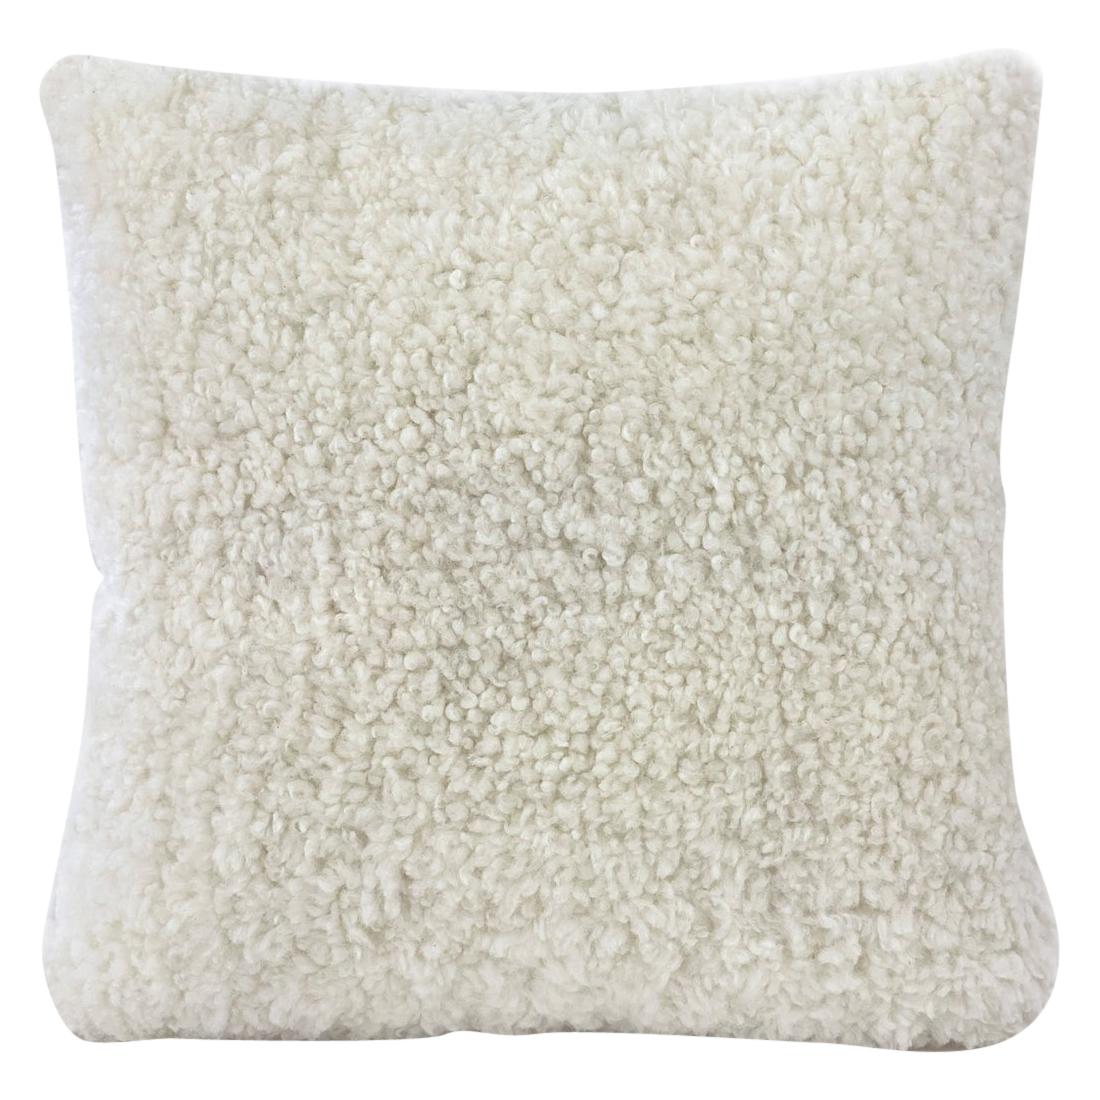 Shearling Sheepskin Pillow, White 50x50cm  20x20"